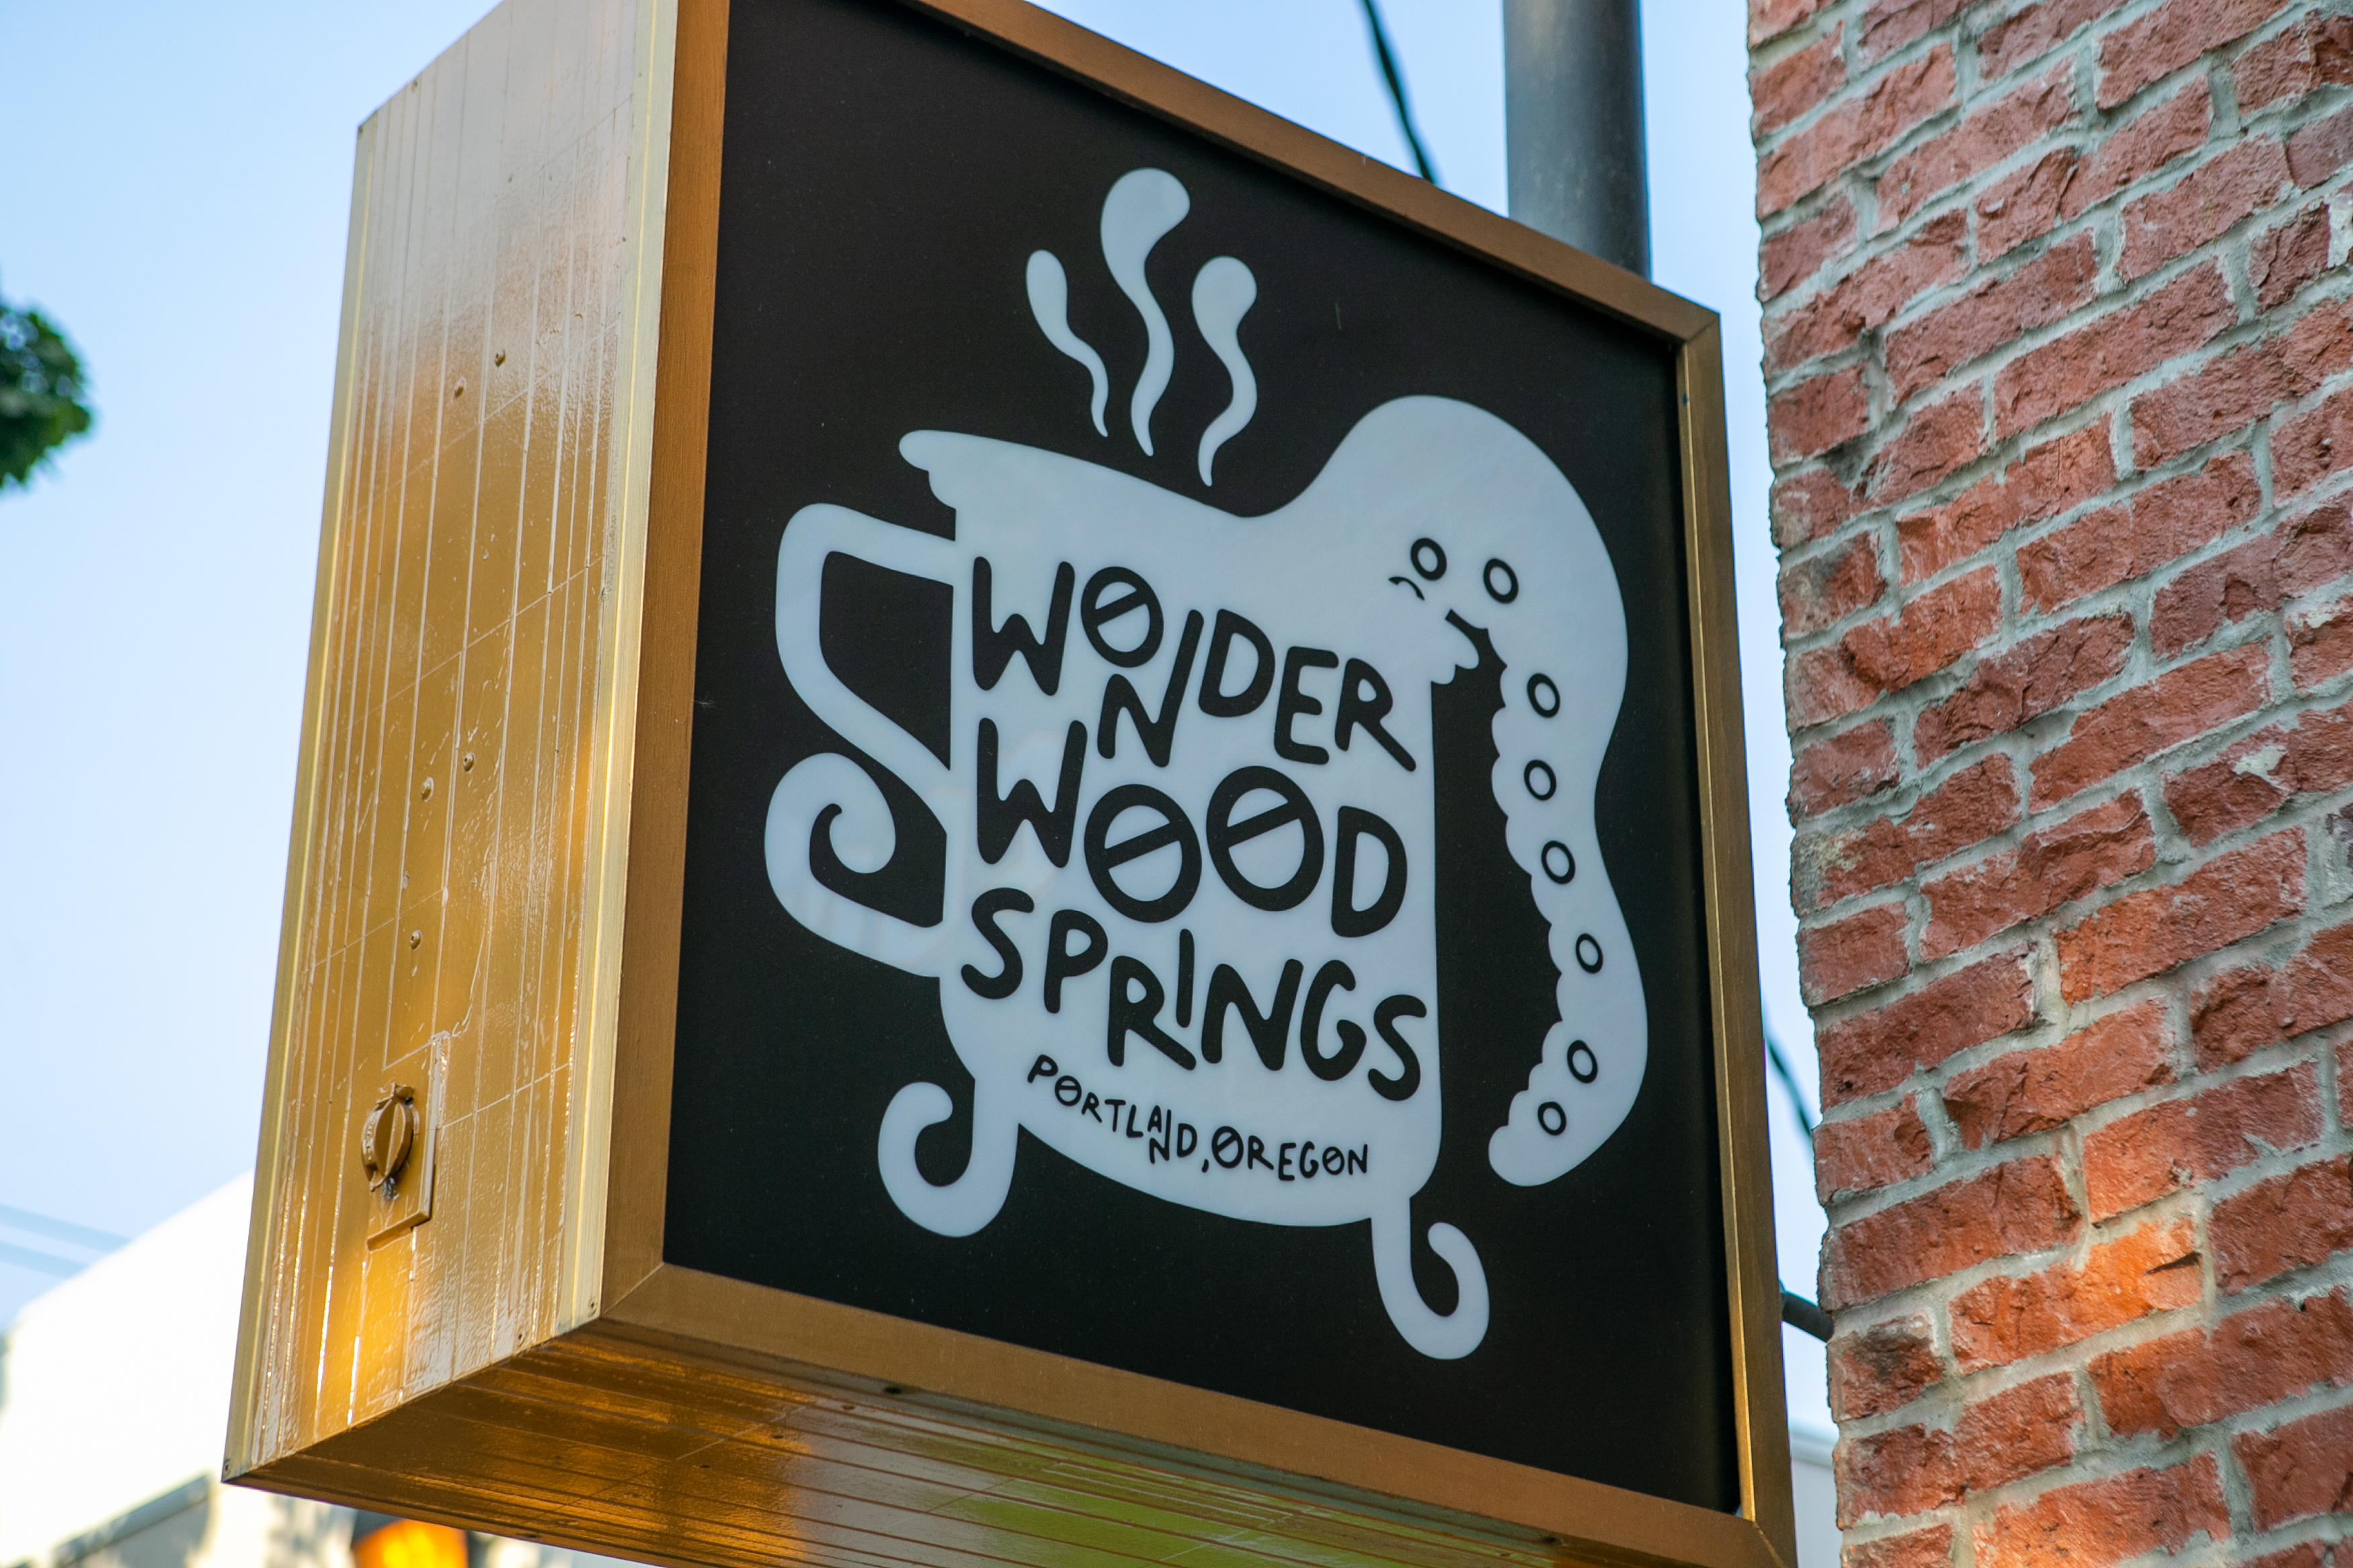 Mike Bennett’s Wonderwood Springs cafe in North Portland's St. Johns neighborhood, captured Tuesday, Oct. 18, 2022.